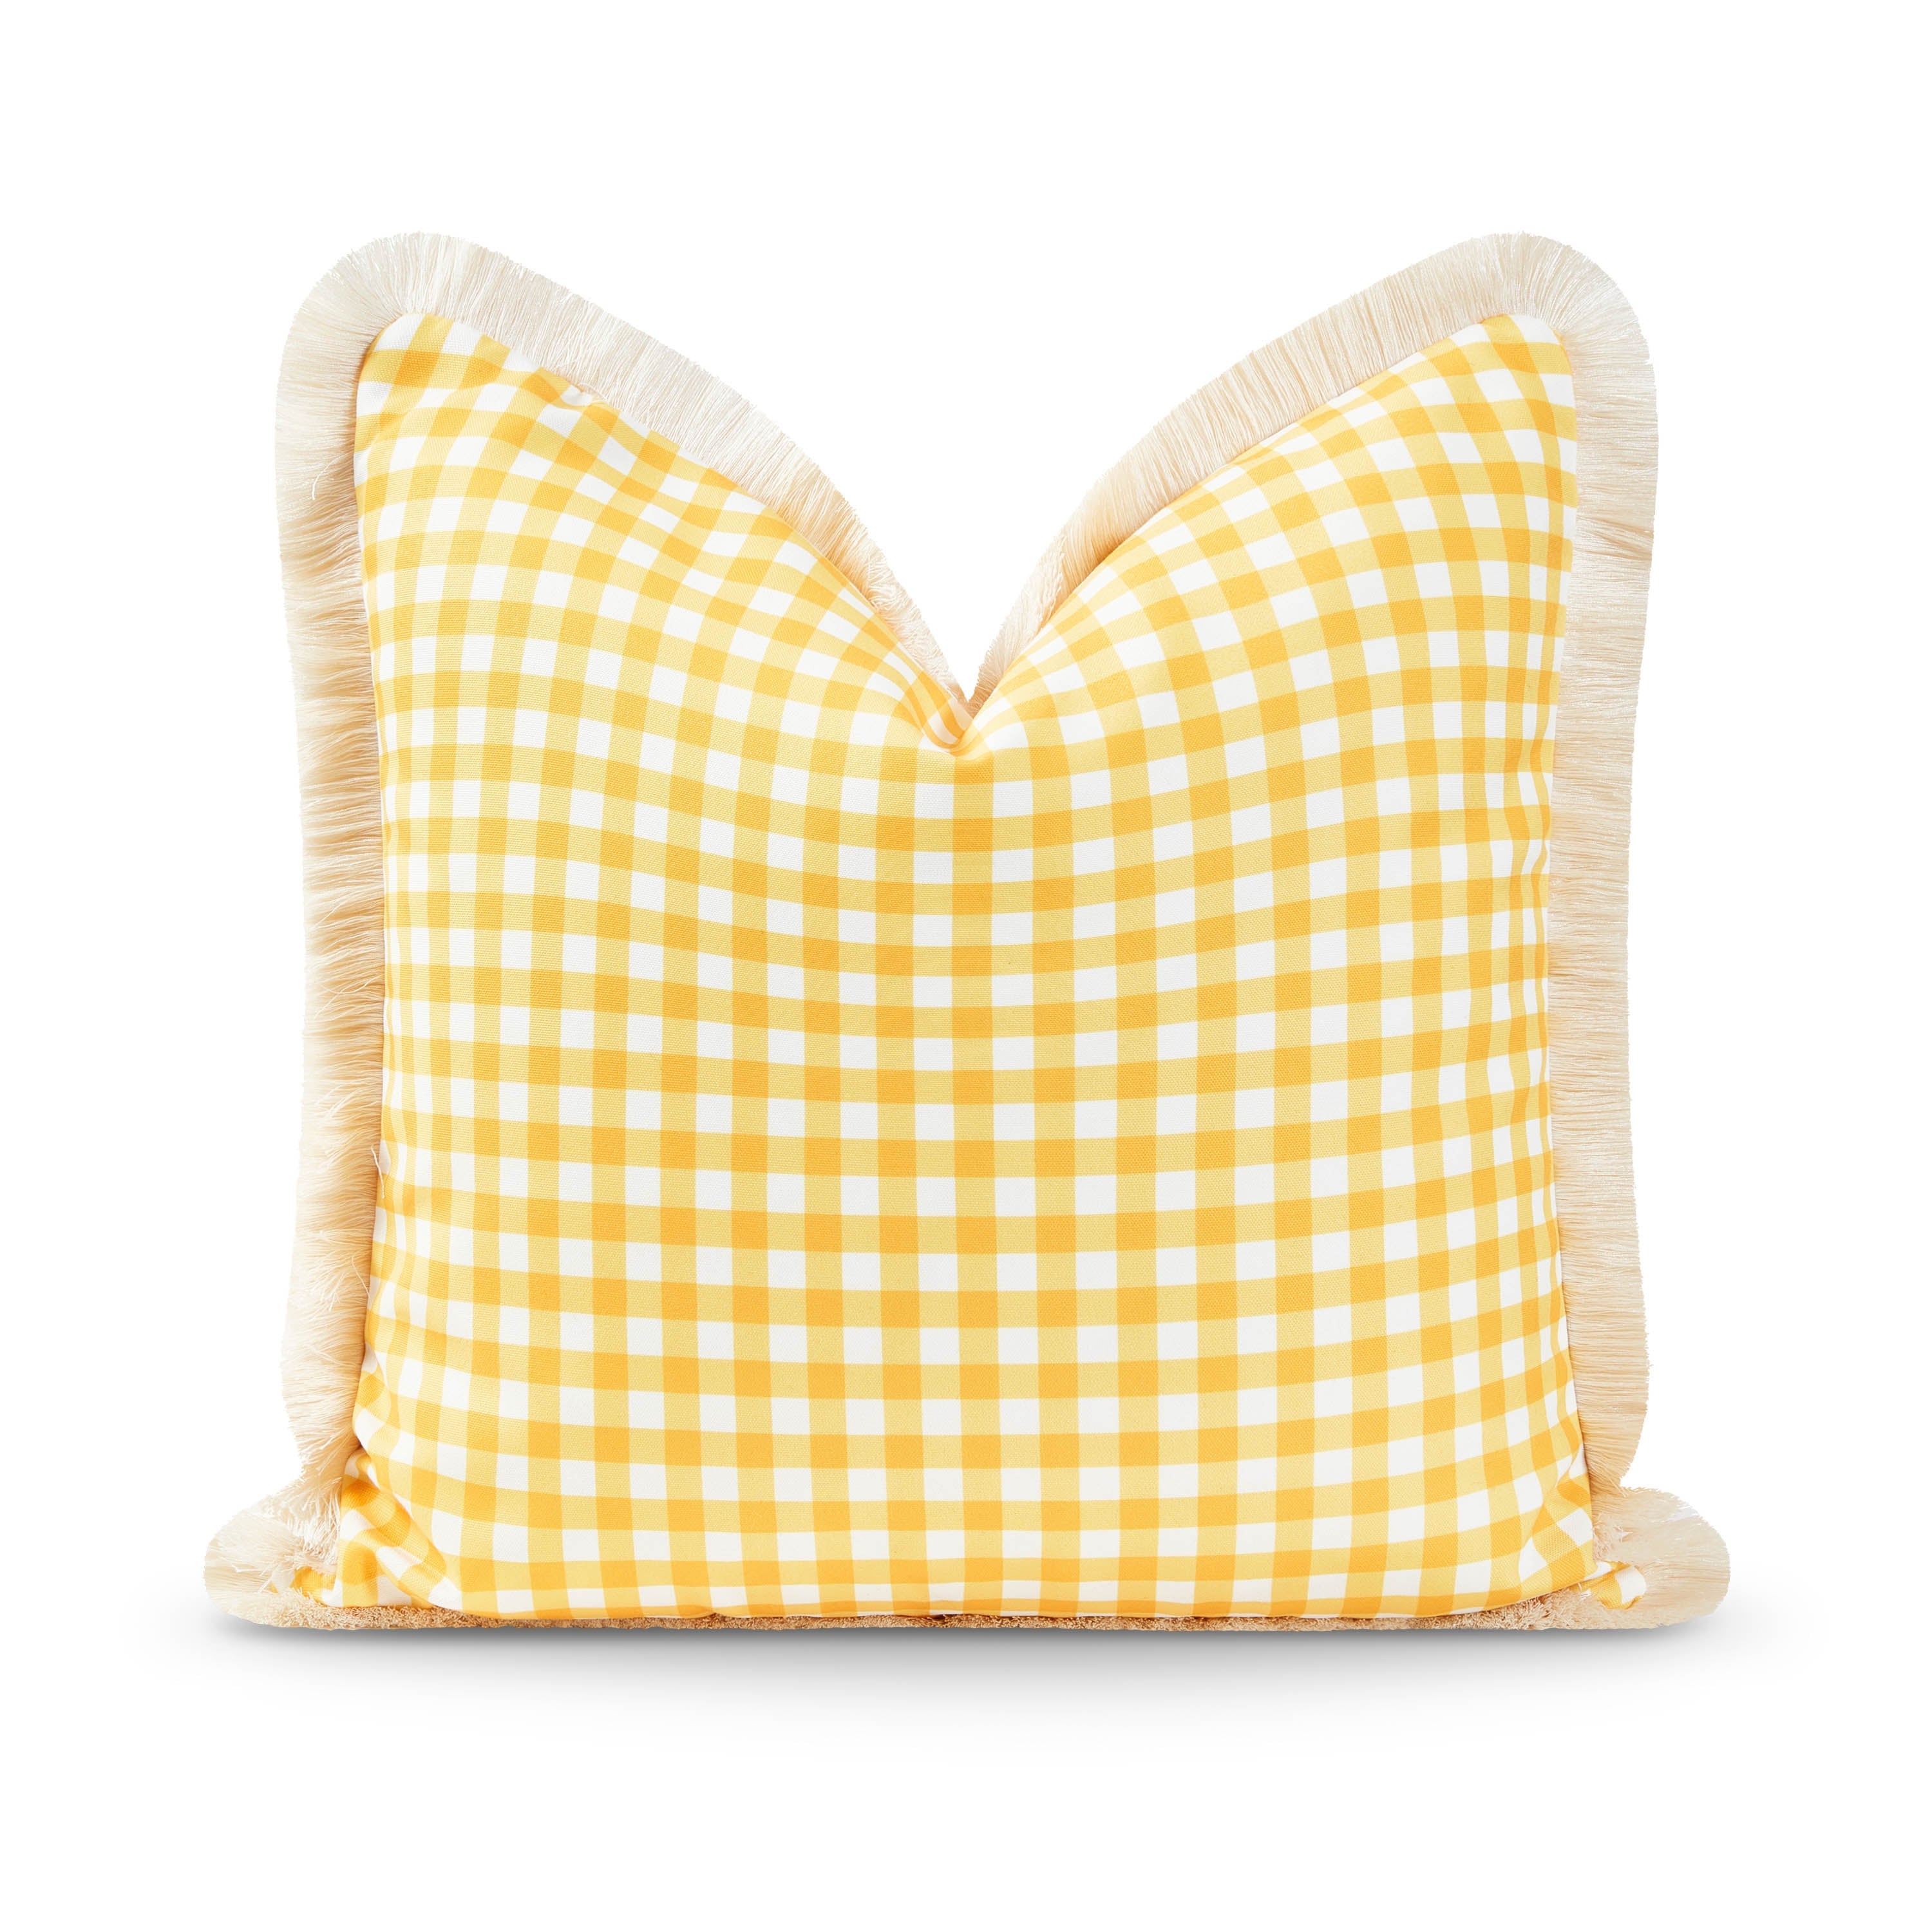 Coastal Indoor Outdoor Pillow Cover, Gingham Fringe, Yellow, 20"x20"